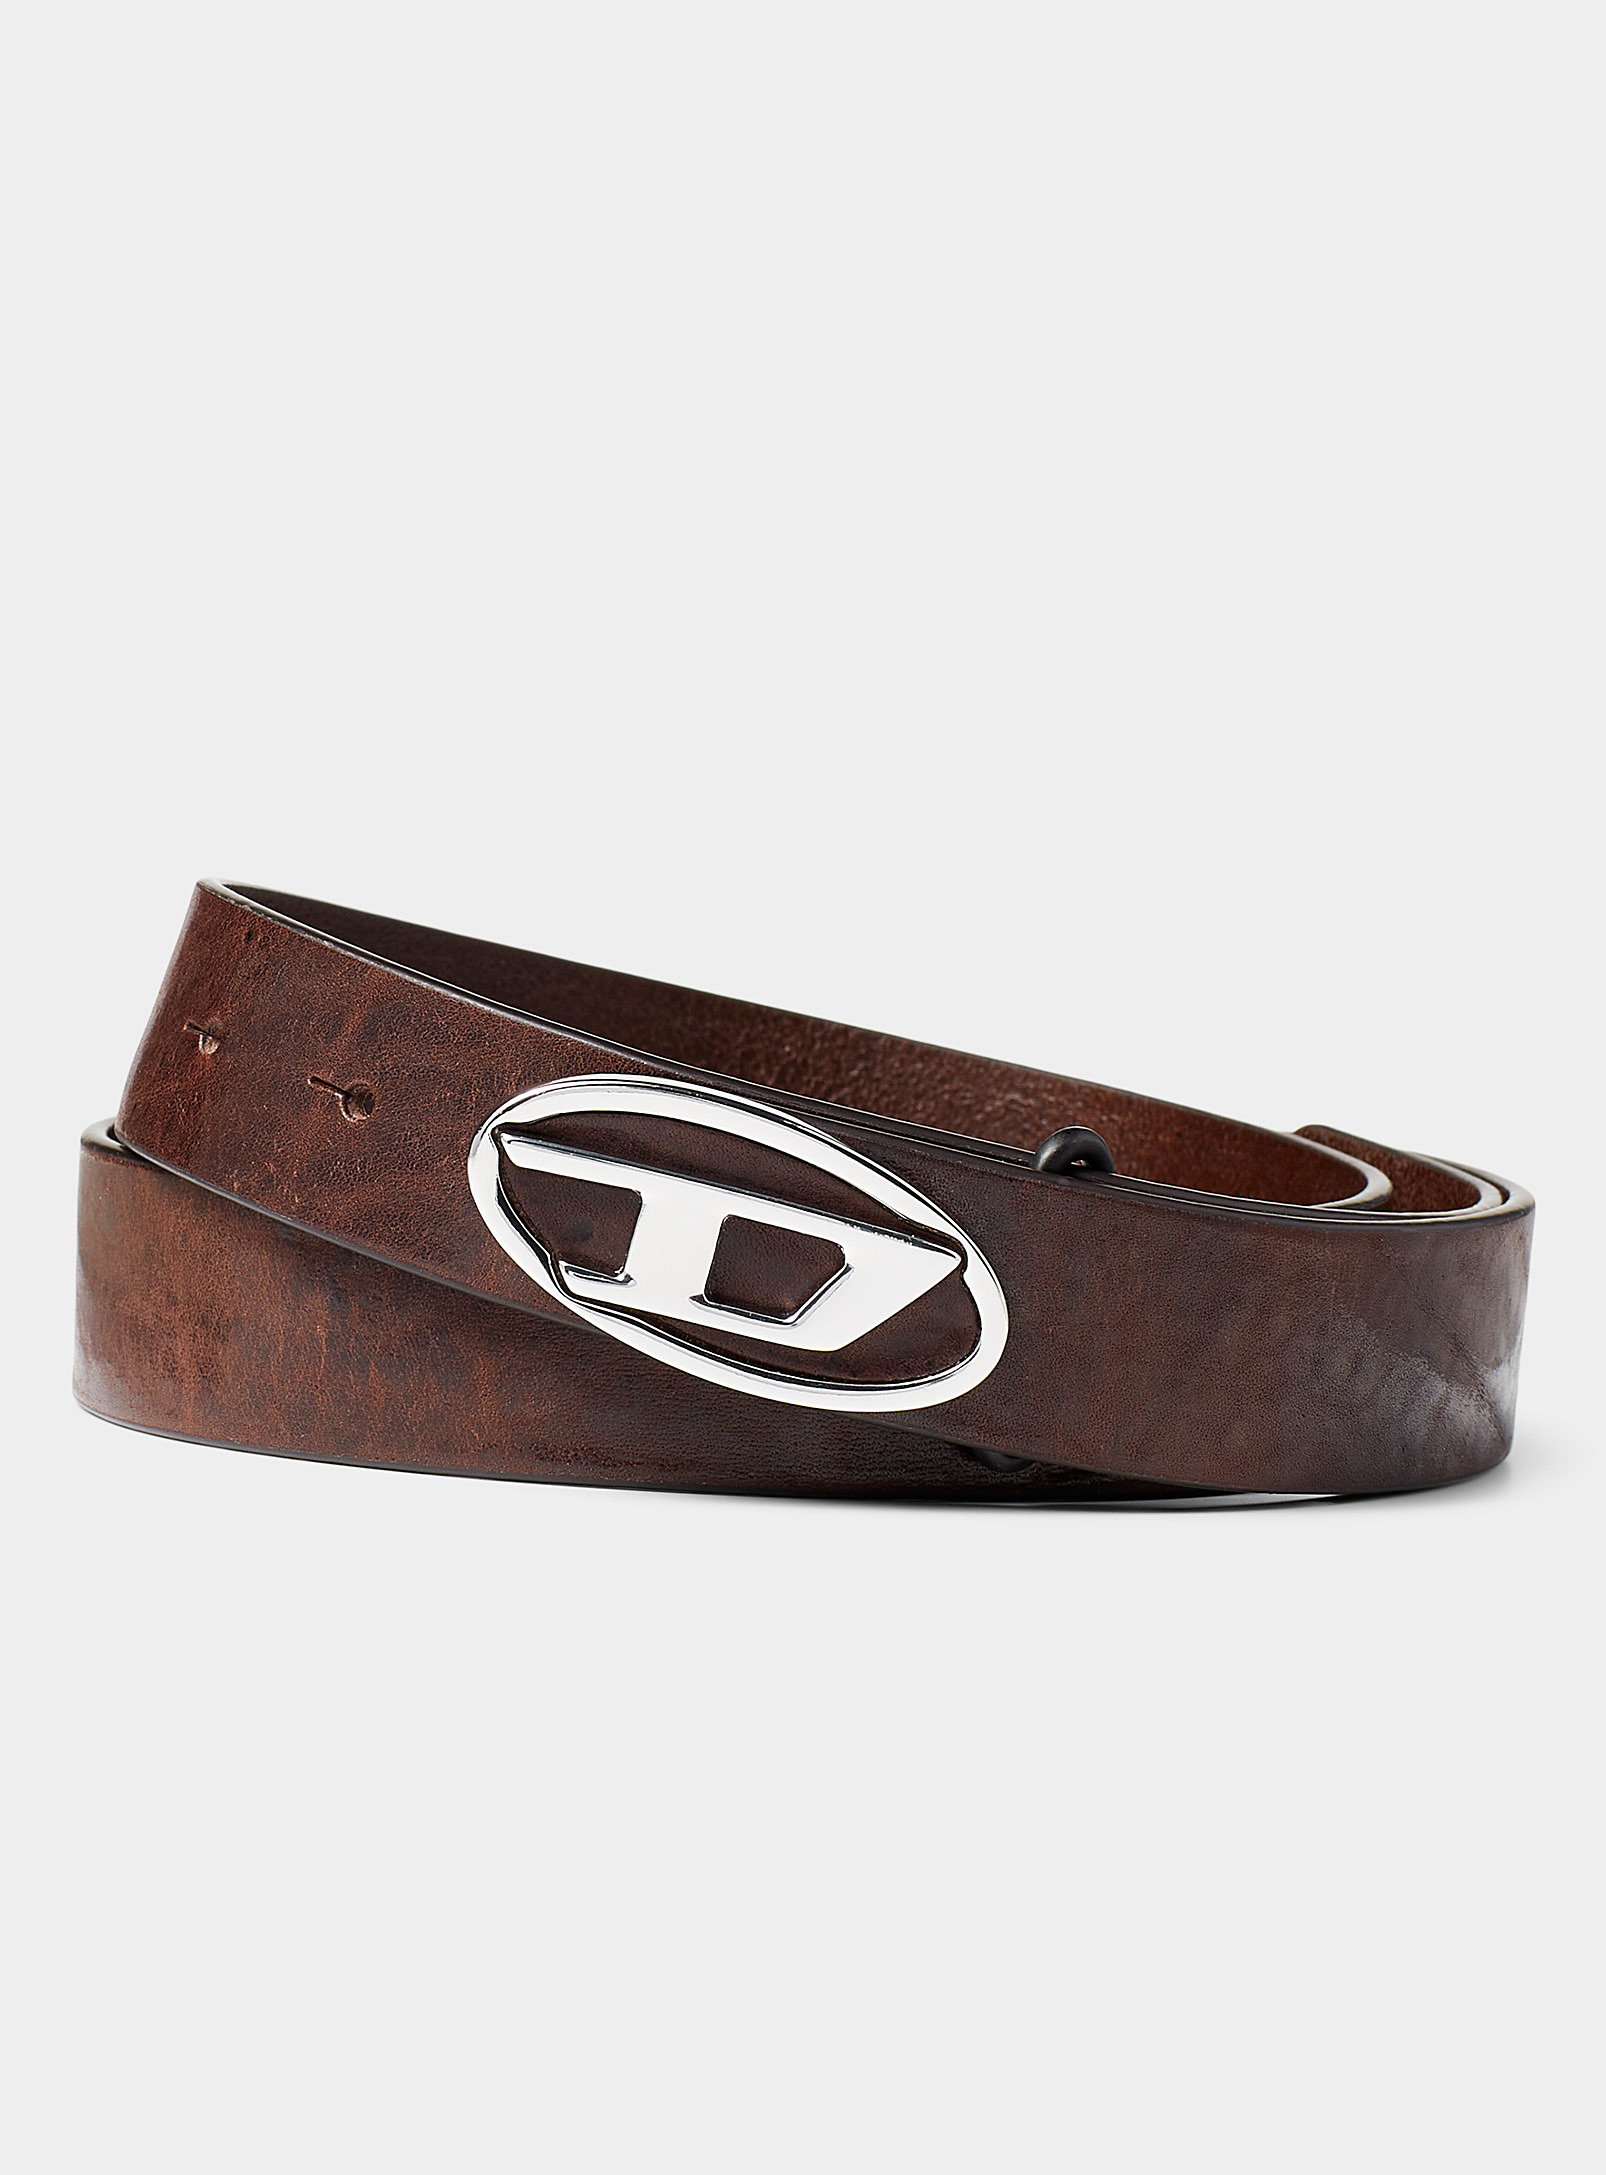 Diesel - Men's Small metallic logo belt